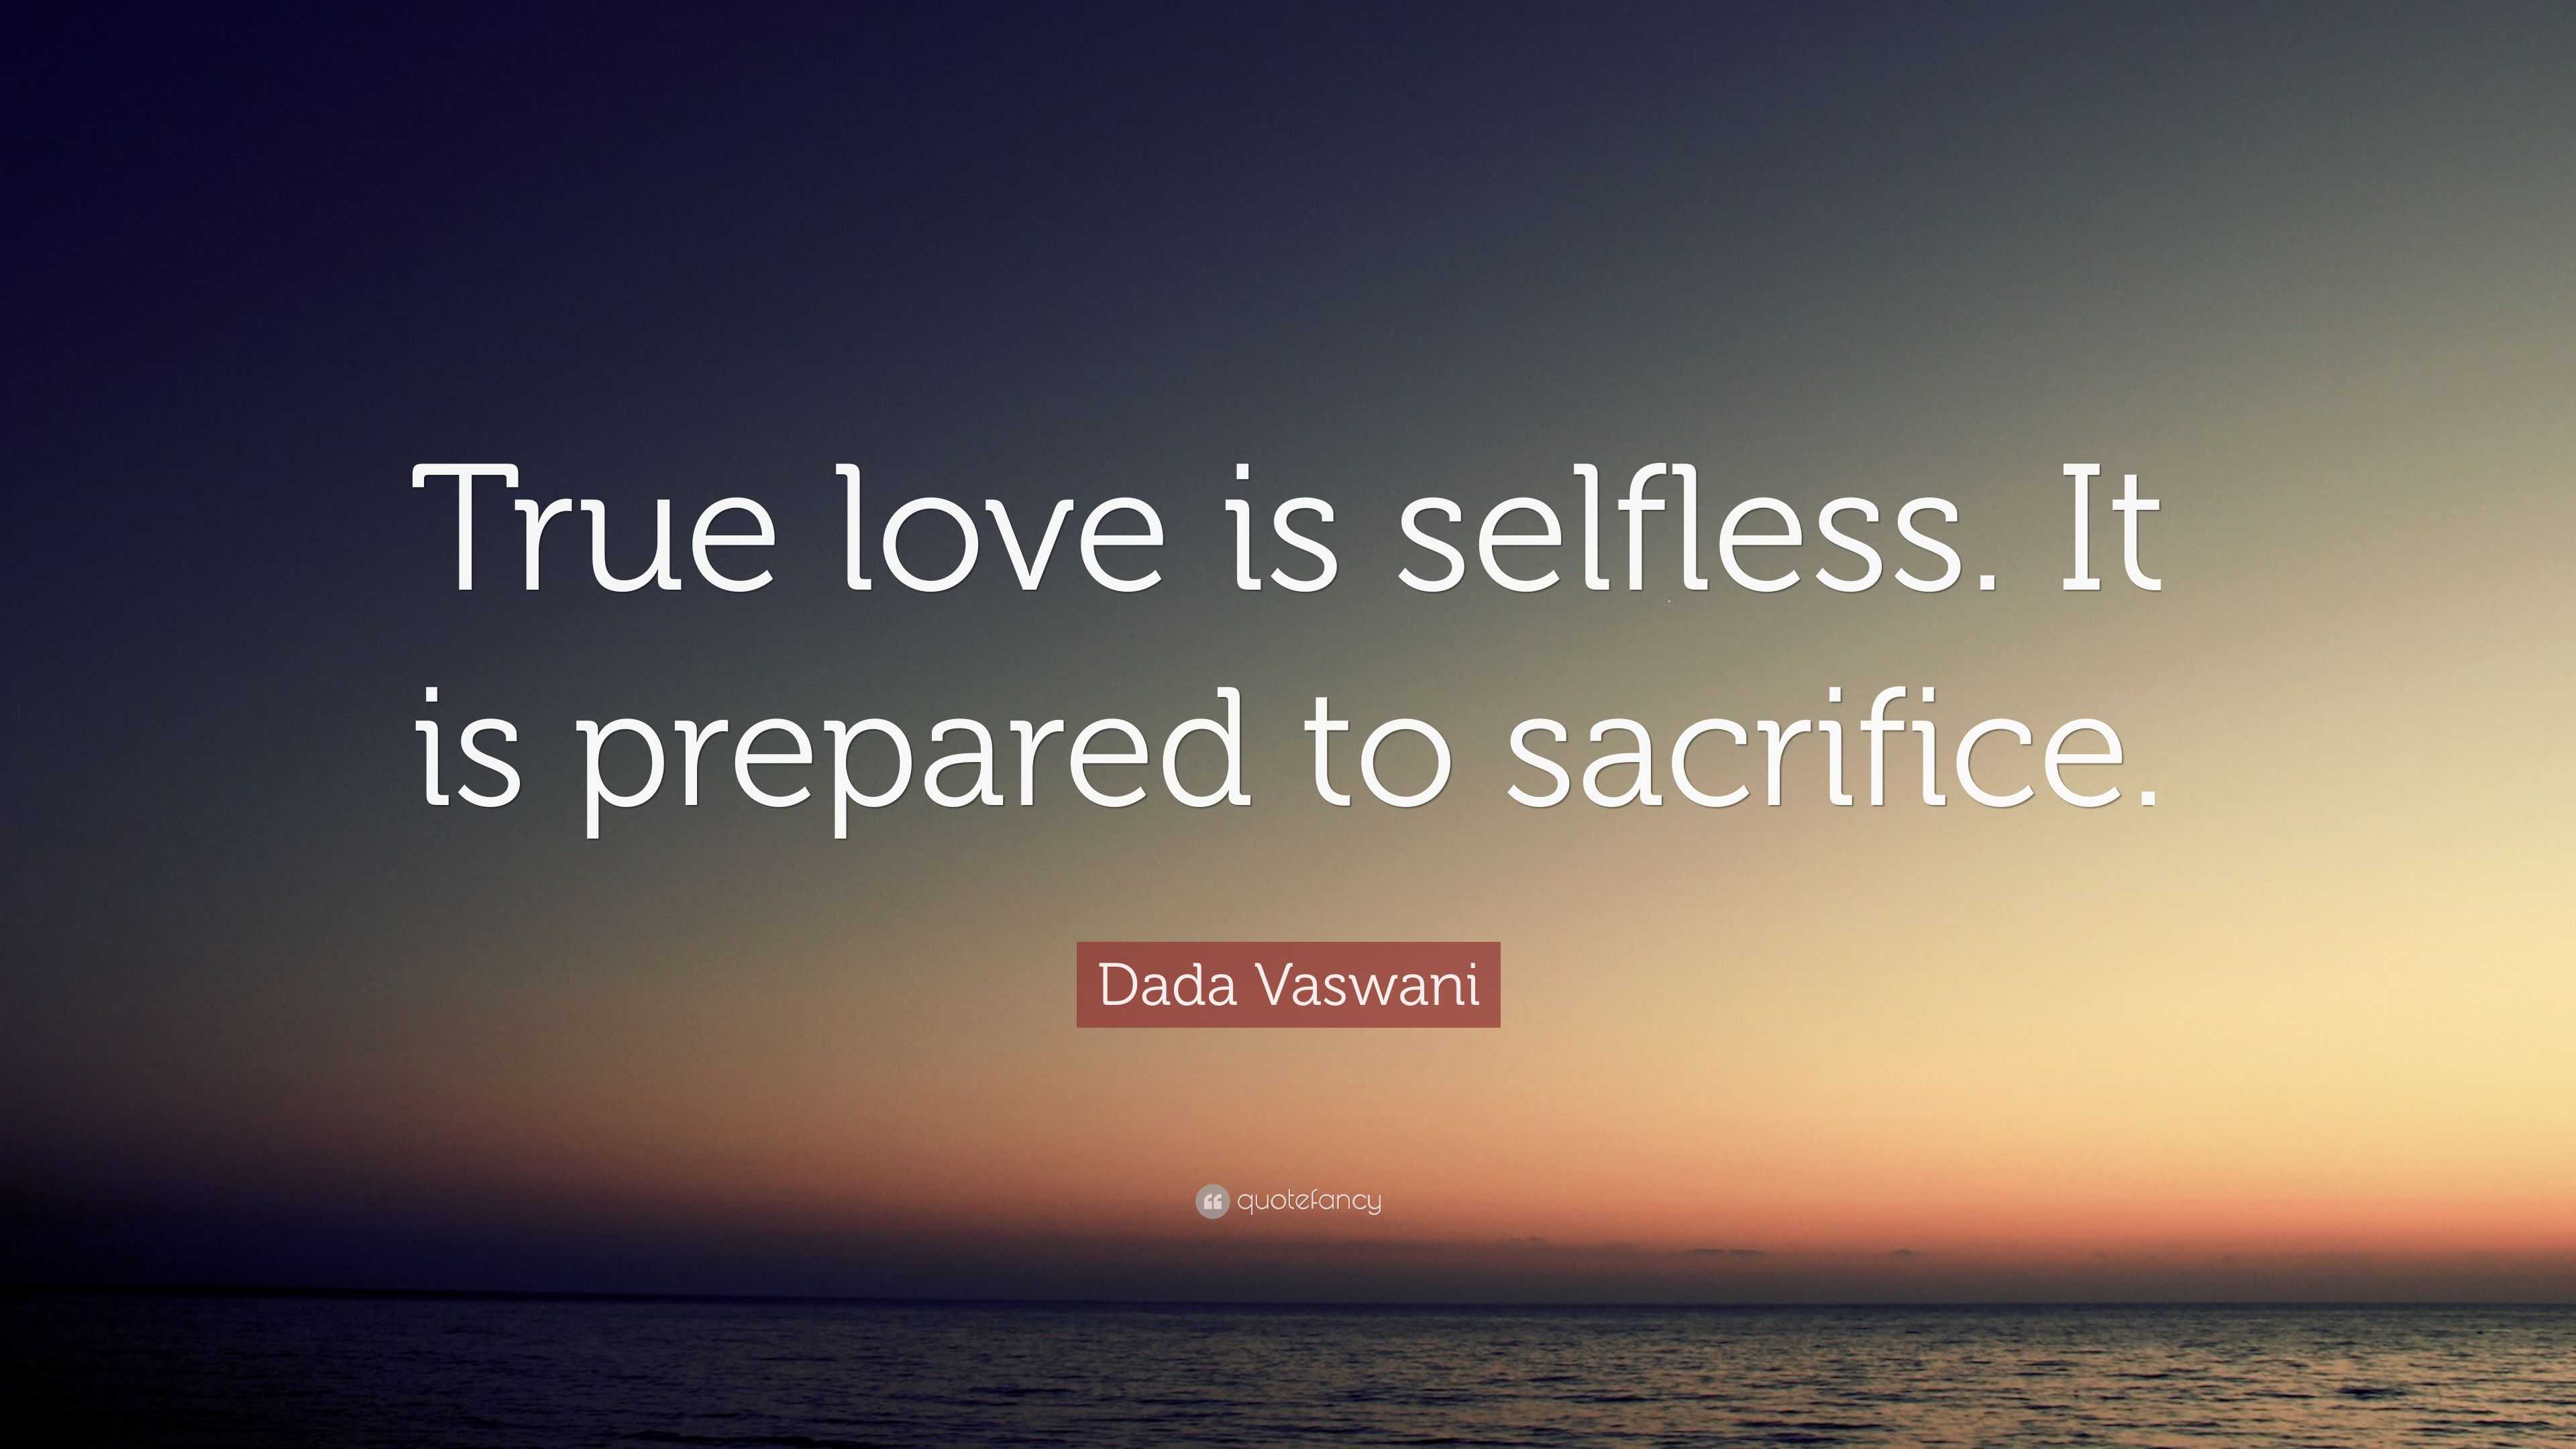 Dada Vaswani Quote: “True love is selfless. It is prepared to